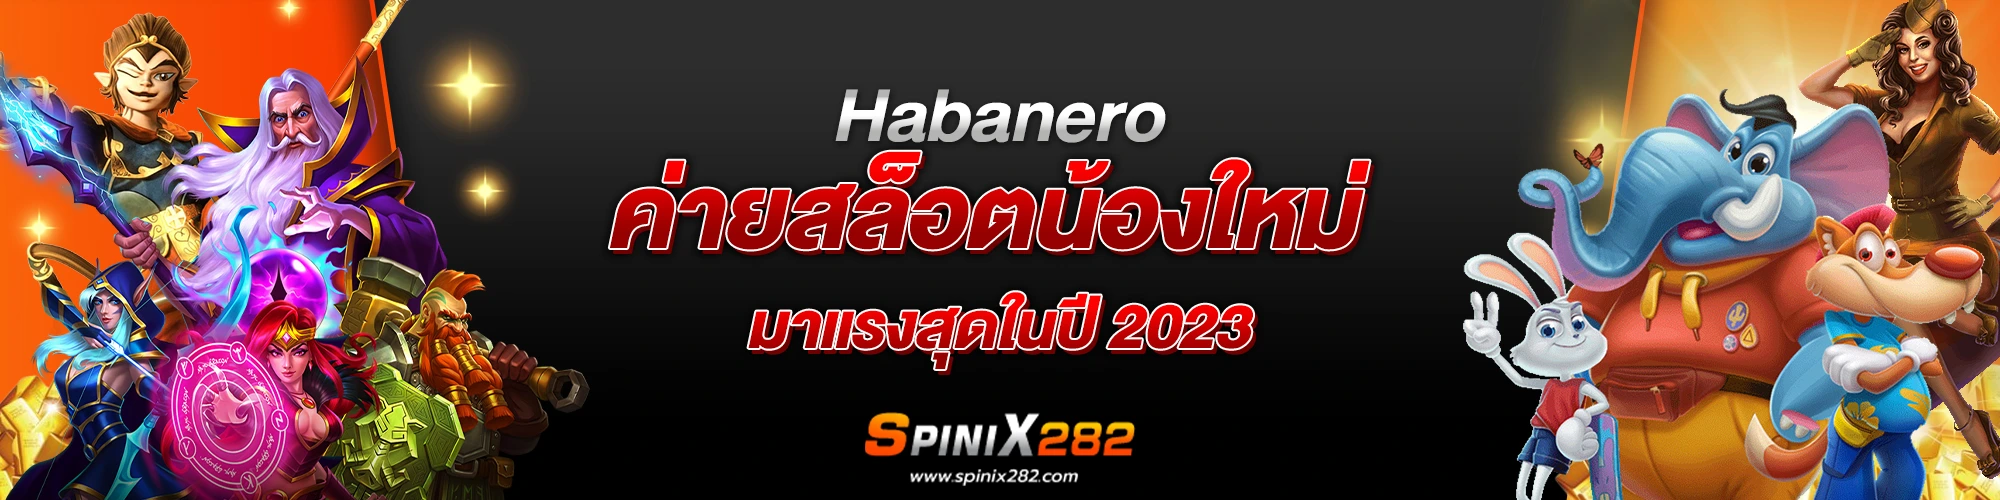 Habanero ค่ายสล็อตน้องใหม่ มาแรงสุดในปี 2023​